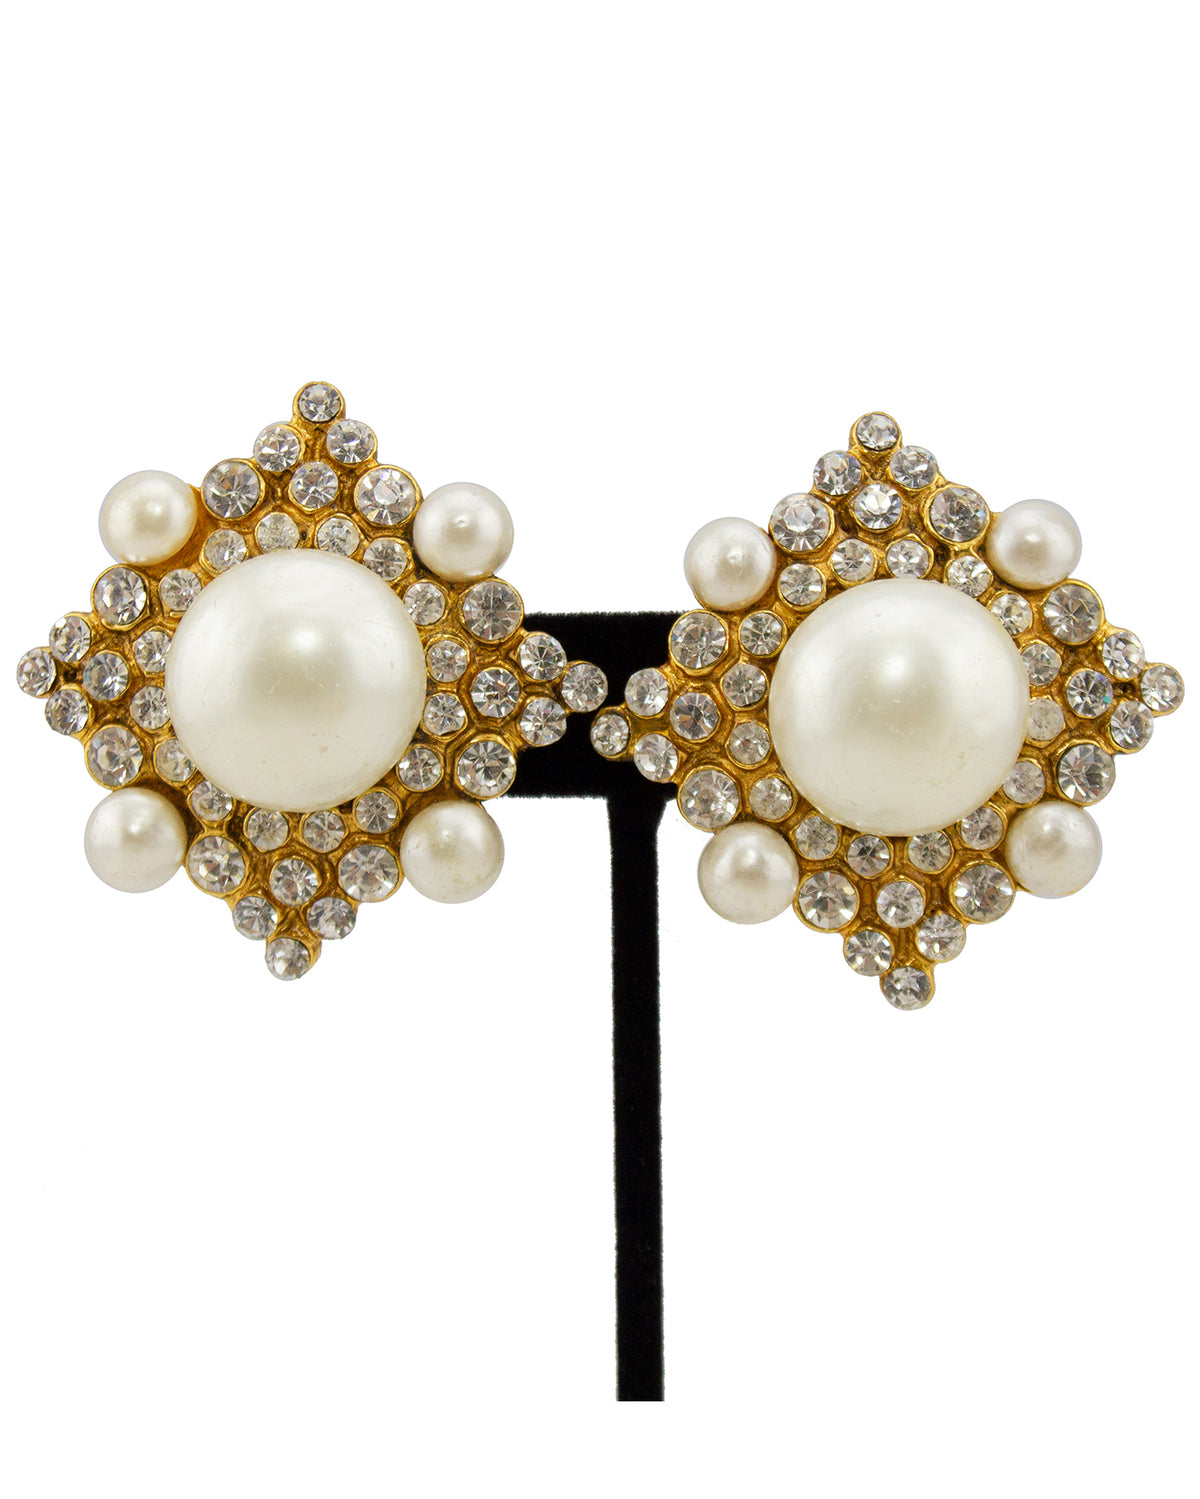 Chanel Pearl and Gilt Earrings  Chanel pearls, Pearl earrings vintage,  White gold earrings